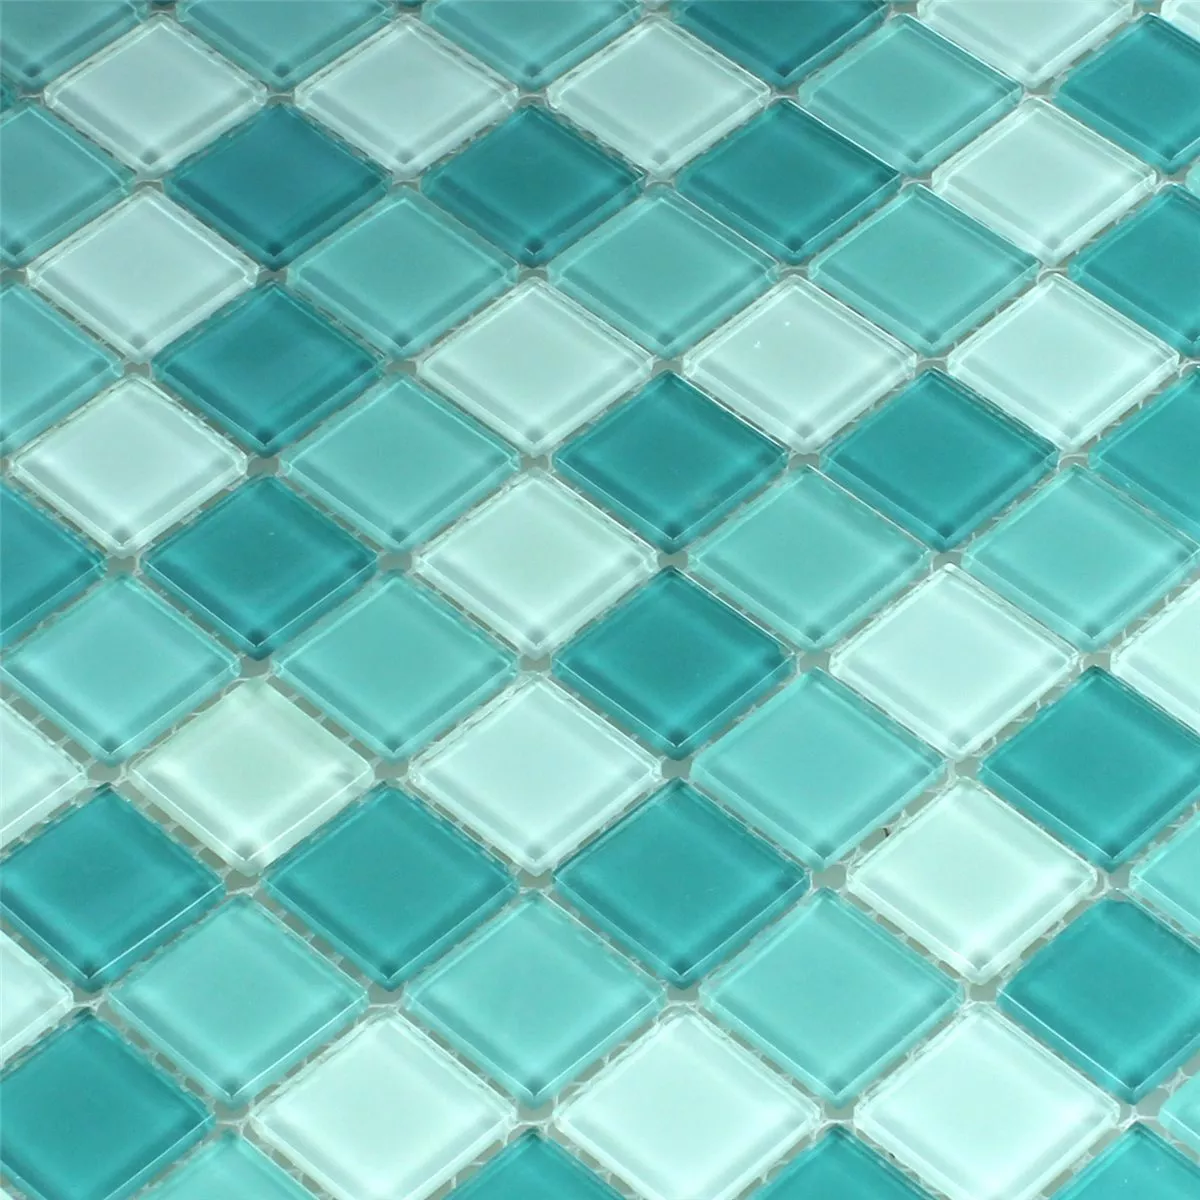 Mozaika Szklana Płytki Zielony Mix 25x25x4mm